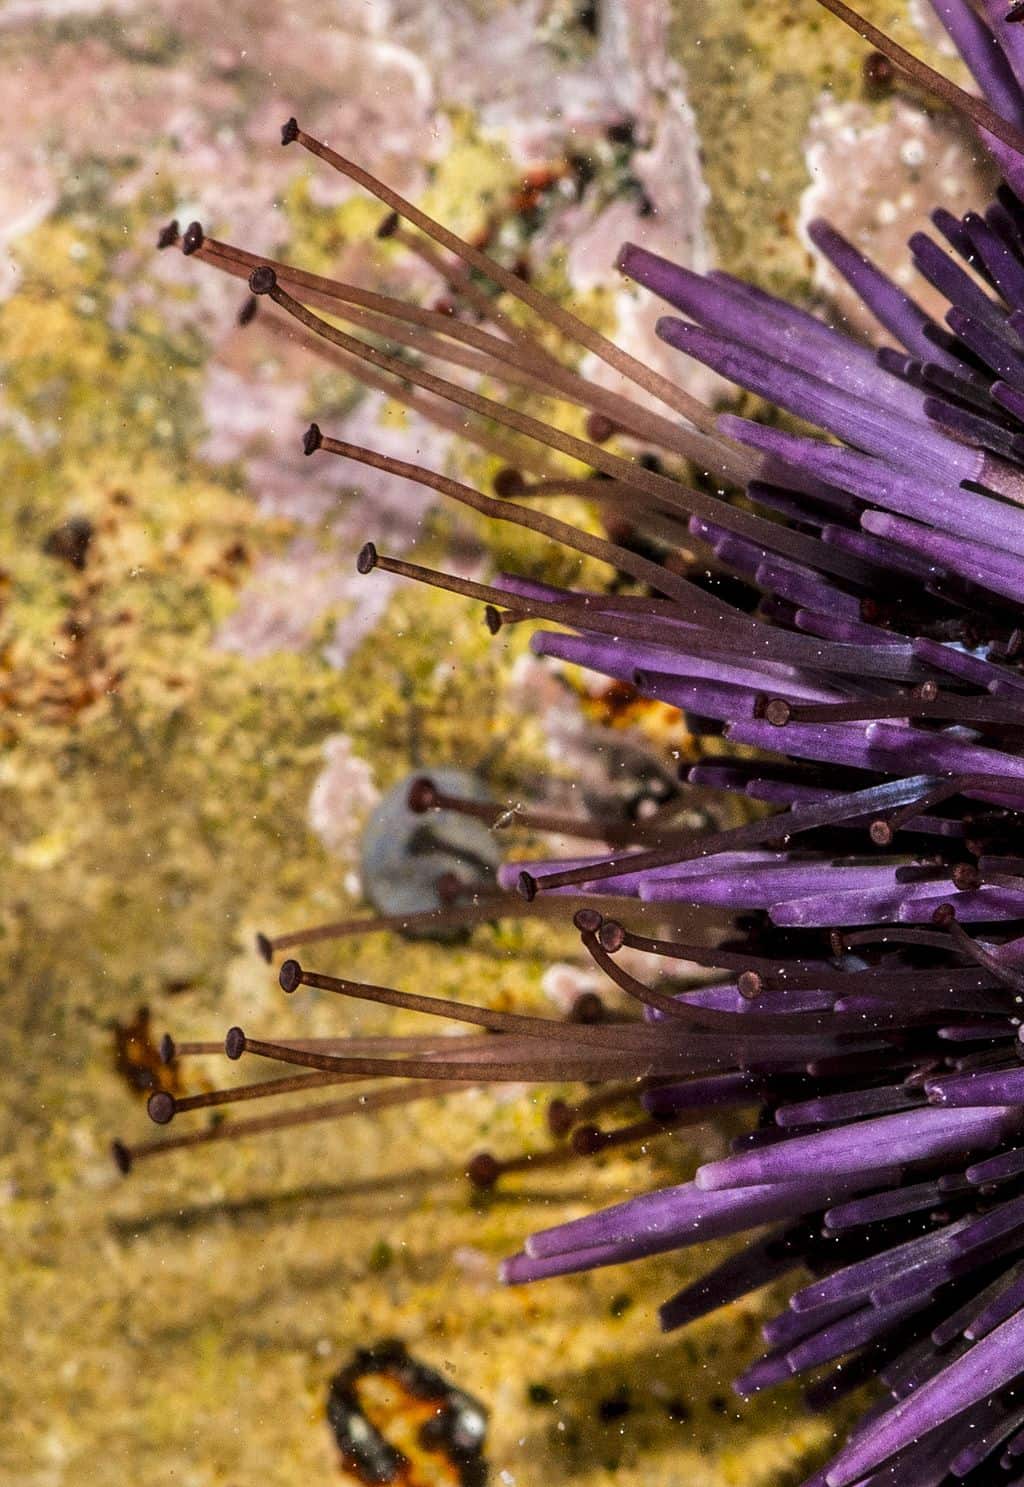 sea urchin 100 foot journey